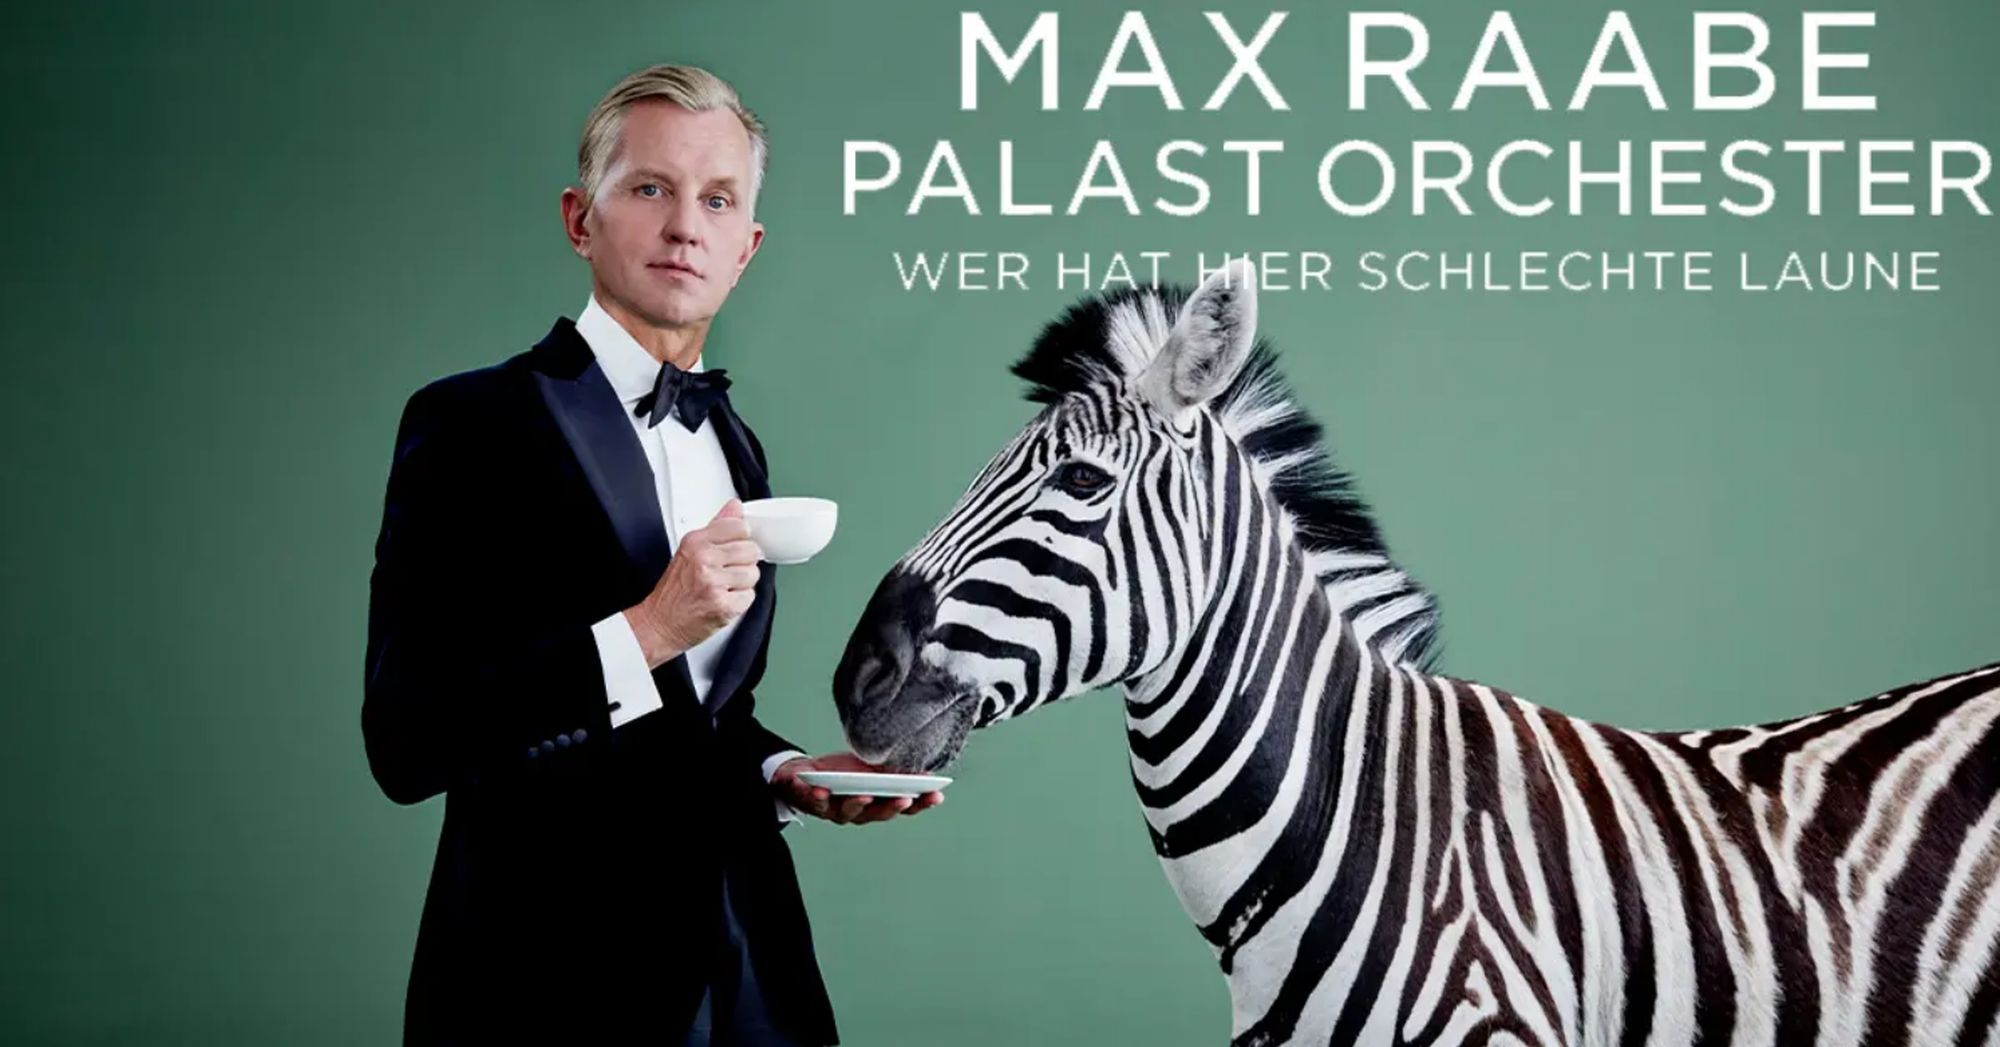 MAX RAABE & PALAST ORCHESTER - Wer hat hier schlechte Laune